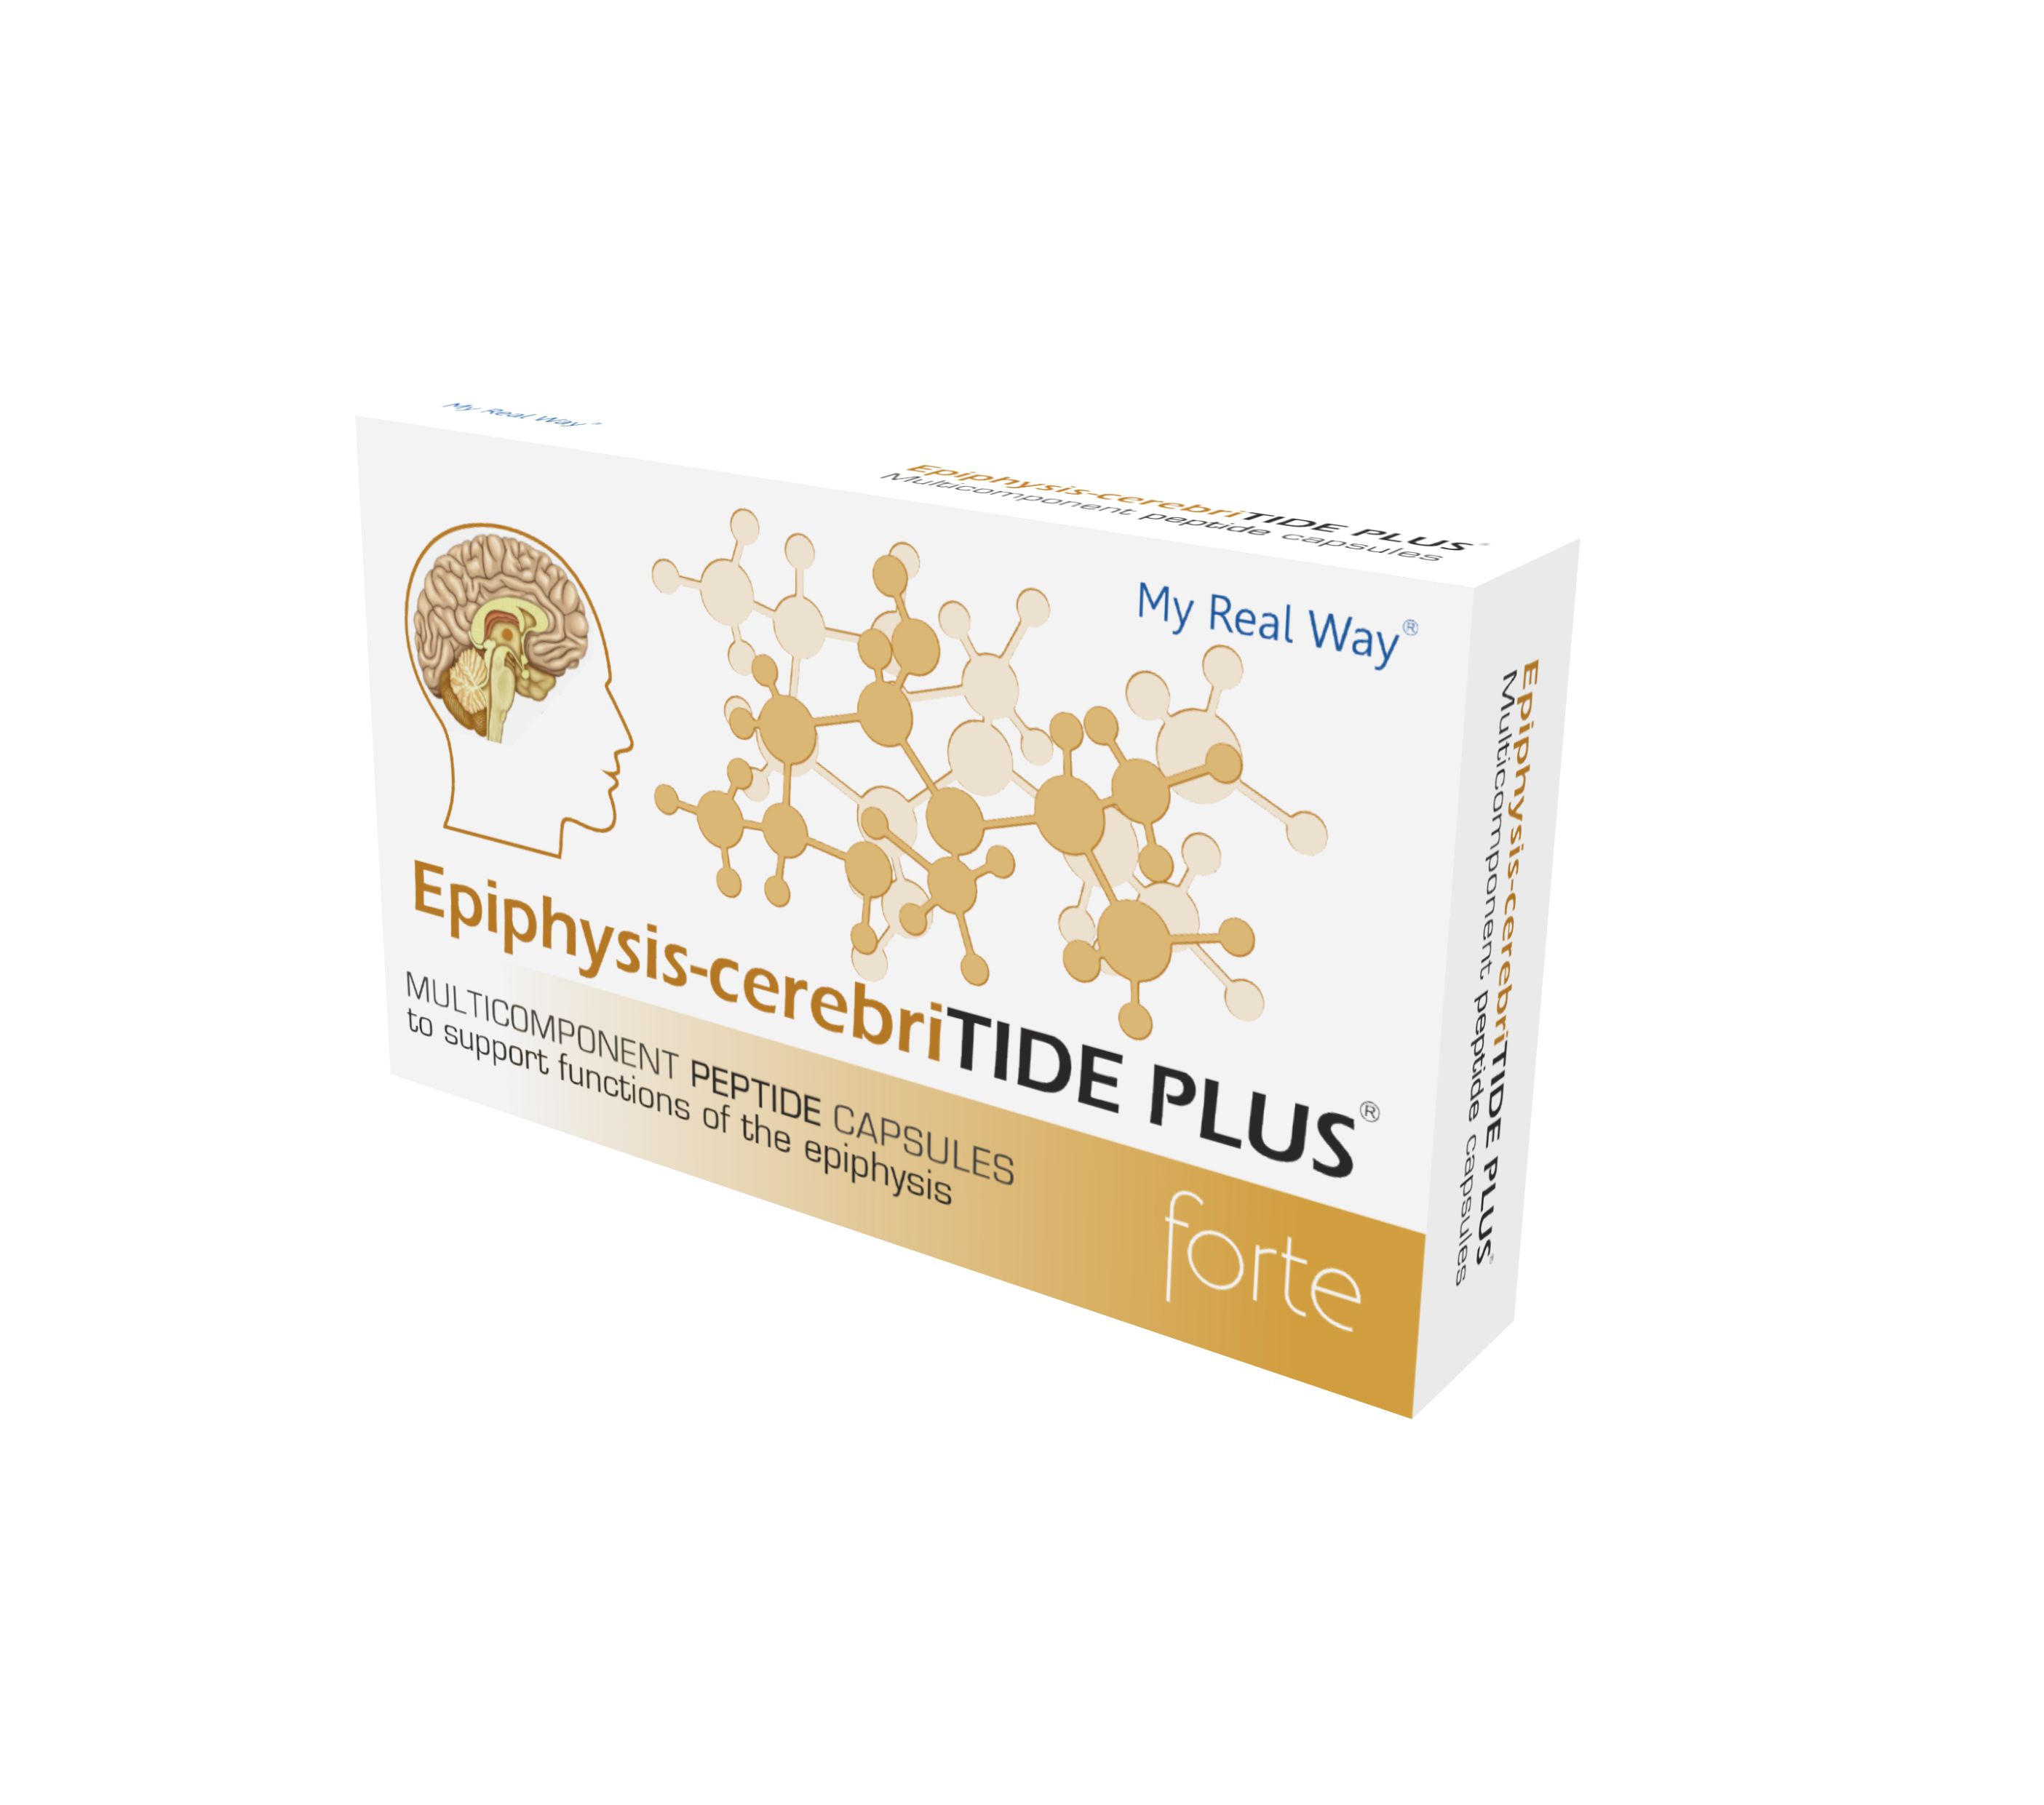 Epiphysis-cerebriTIDE PLUS forte peptides for pineal gland